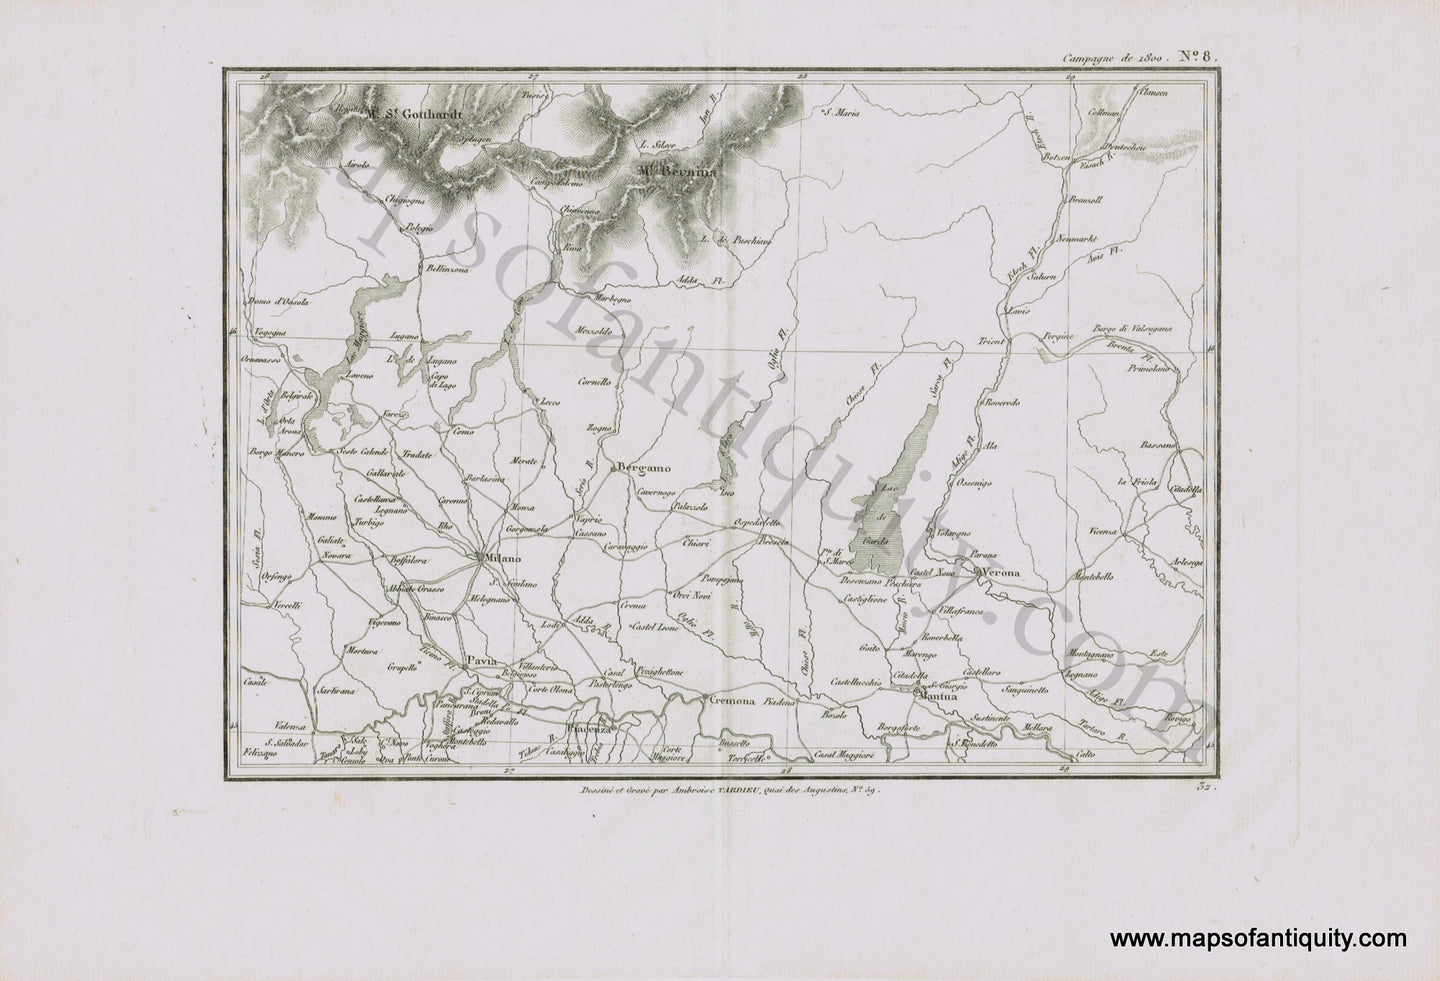 Antique-Map-Northern-North-Italy-Milano-Milan-Bergamo-Verona-Italian-Cities-Region-City-Tardieu-1800-1800s-Early-19th-Century-Maps-of-Antiquity